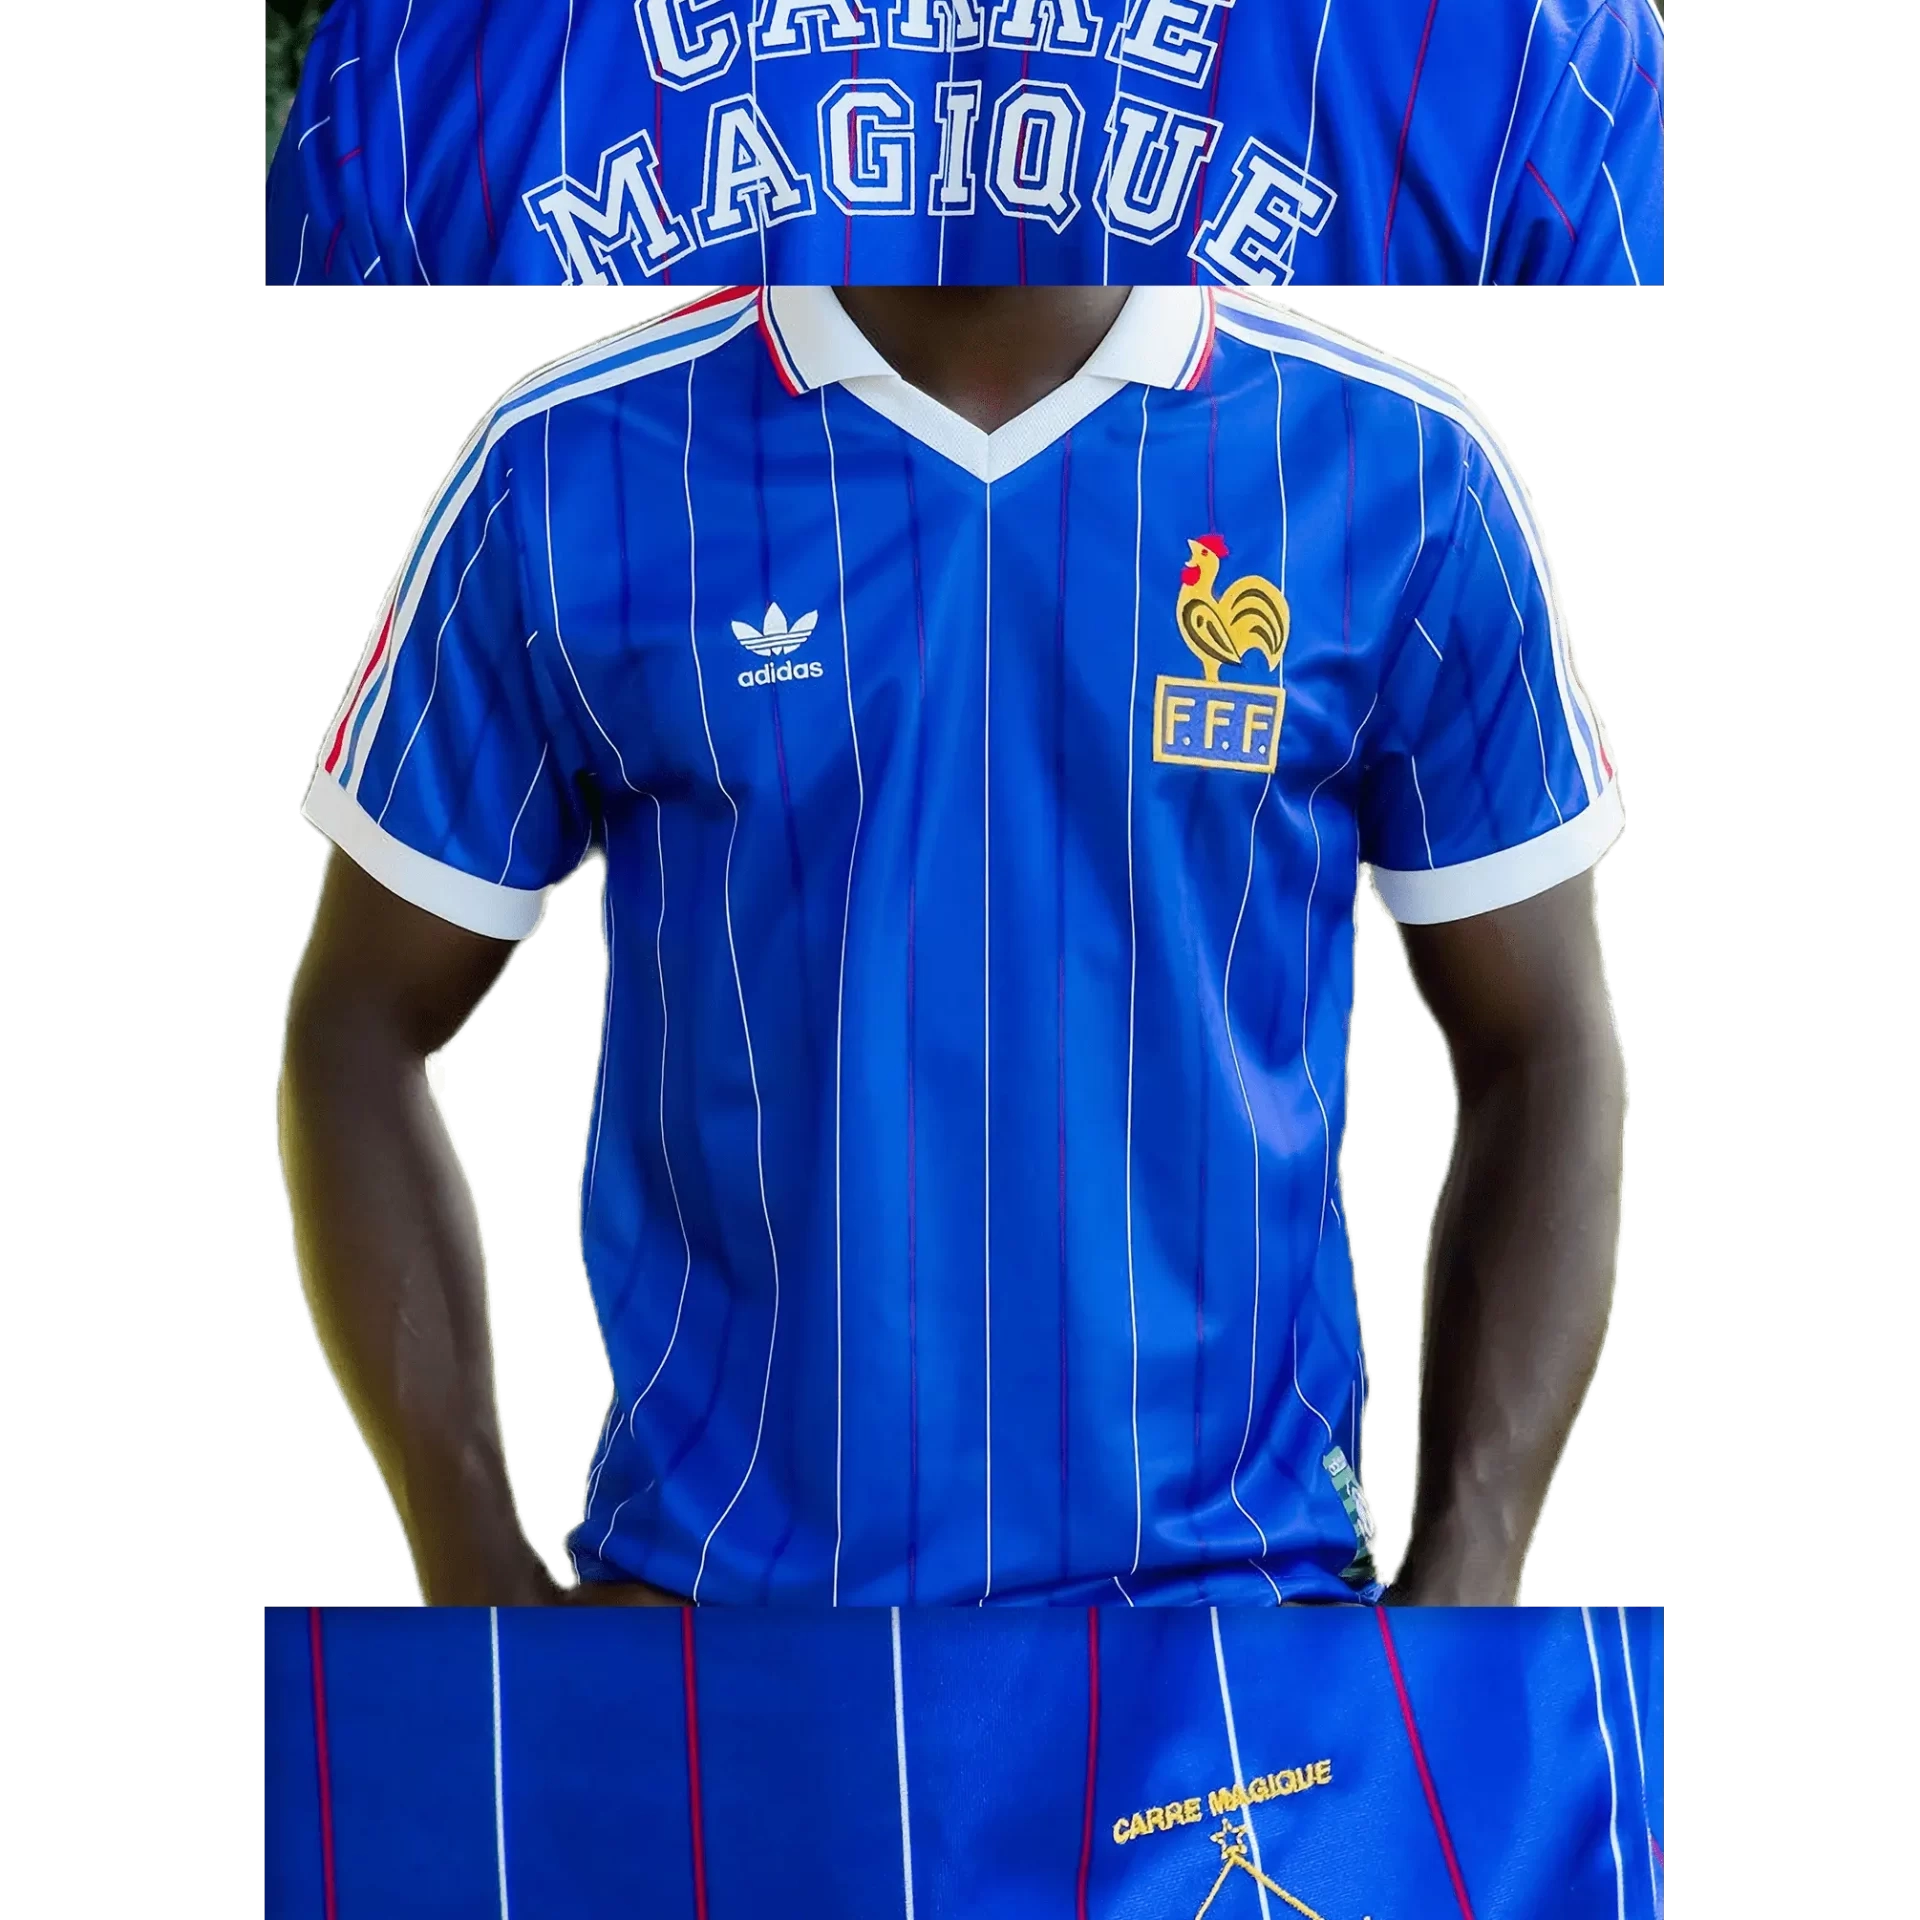 Men's 2005 France '82 Carre Magique Jersey by Adidas: Devoted (EnLawded.com file #lmchk56806ip2y123320kg9st)